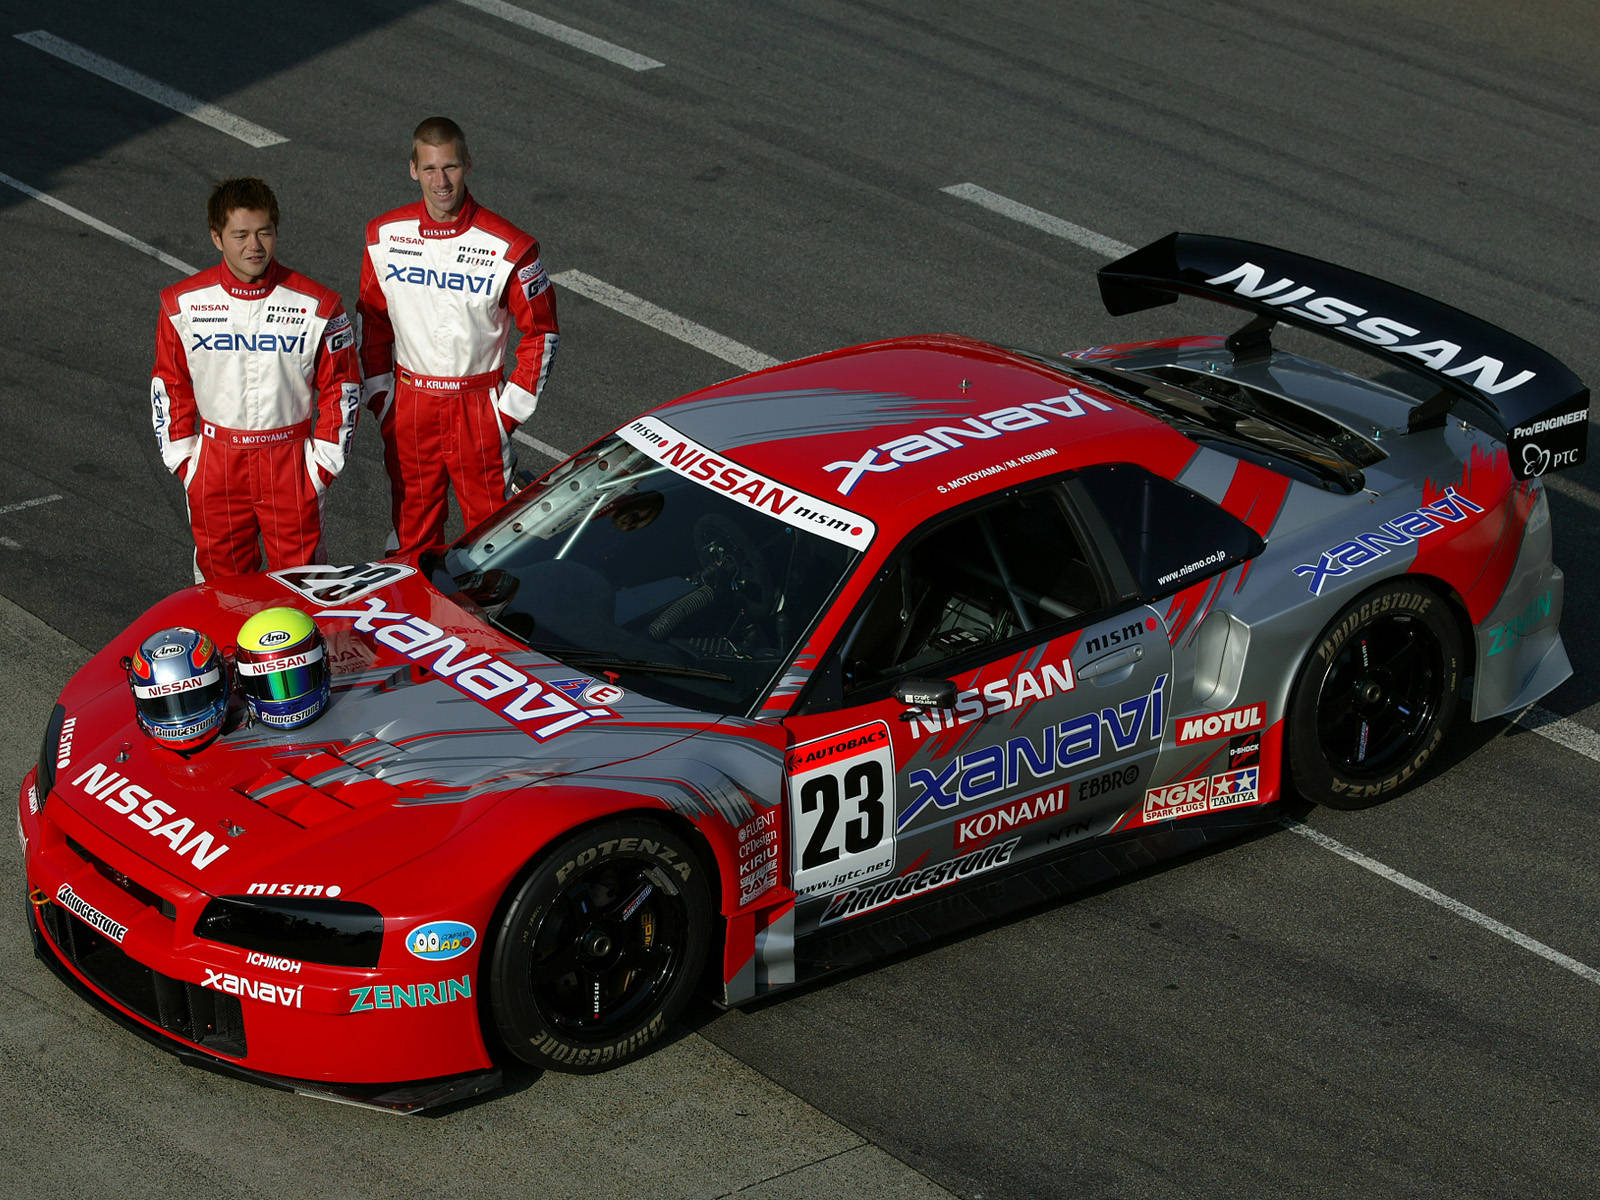 Captivating Shot Of Skyline Car In 2003 Championship Background